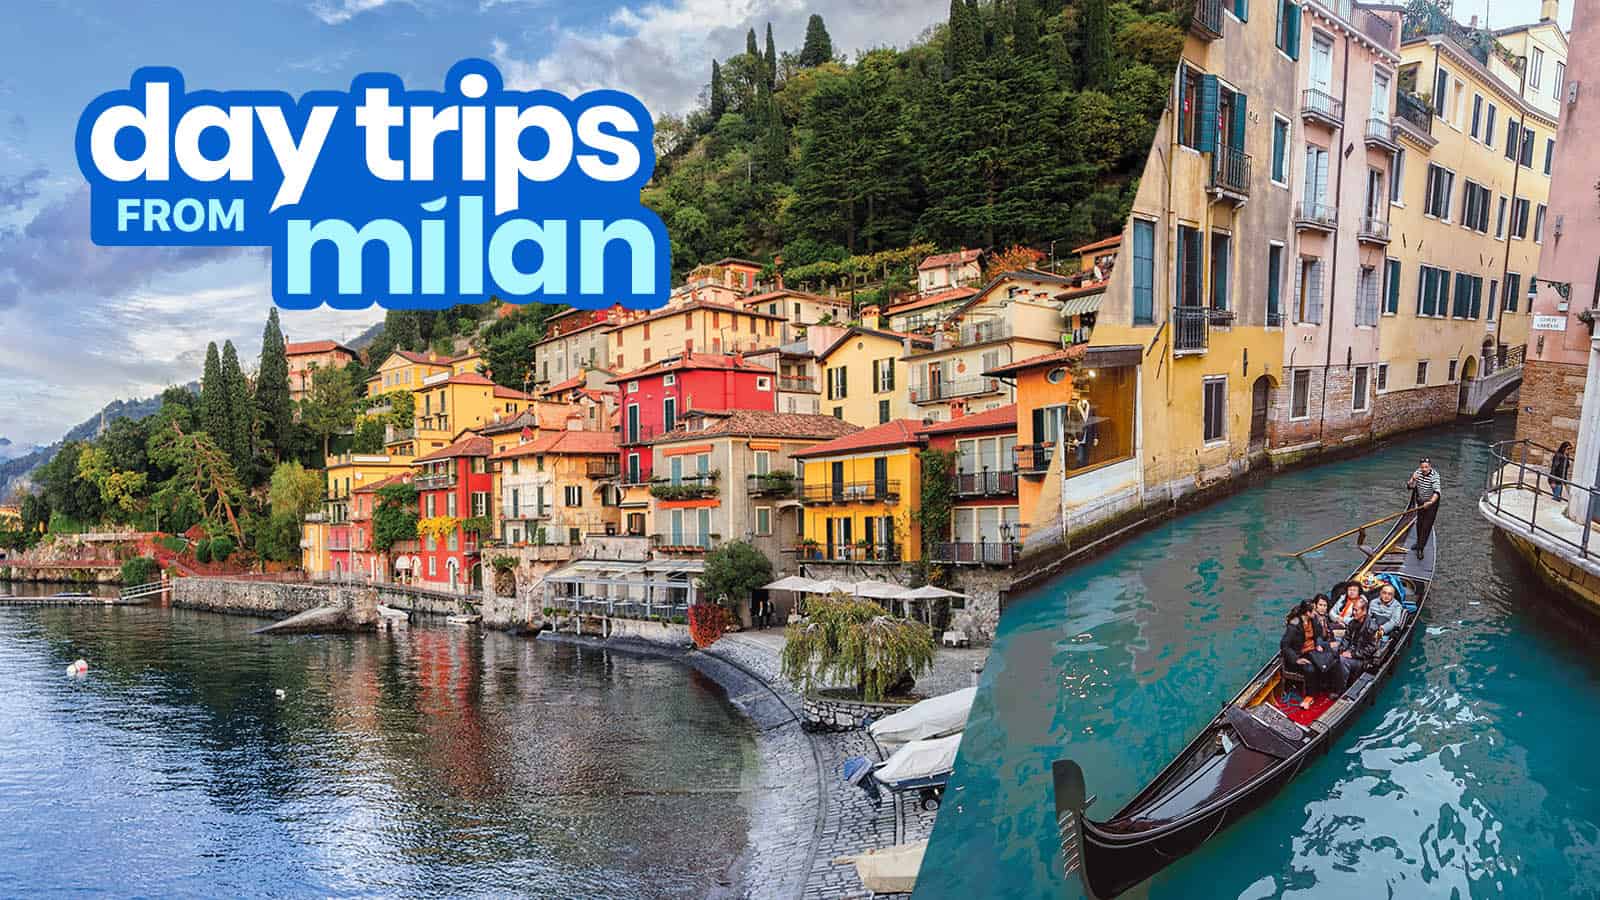 15 DAY TRIP DESTINATIONS FROM MILAN (Italy & Switzerland)